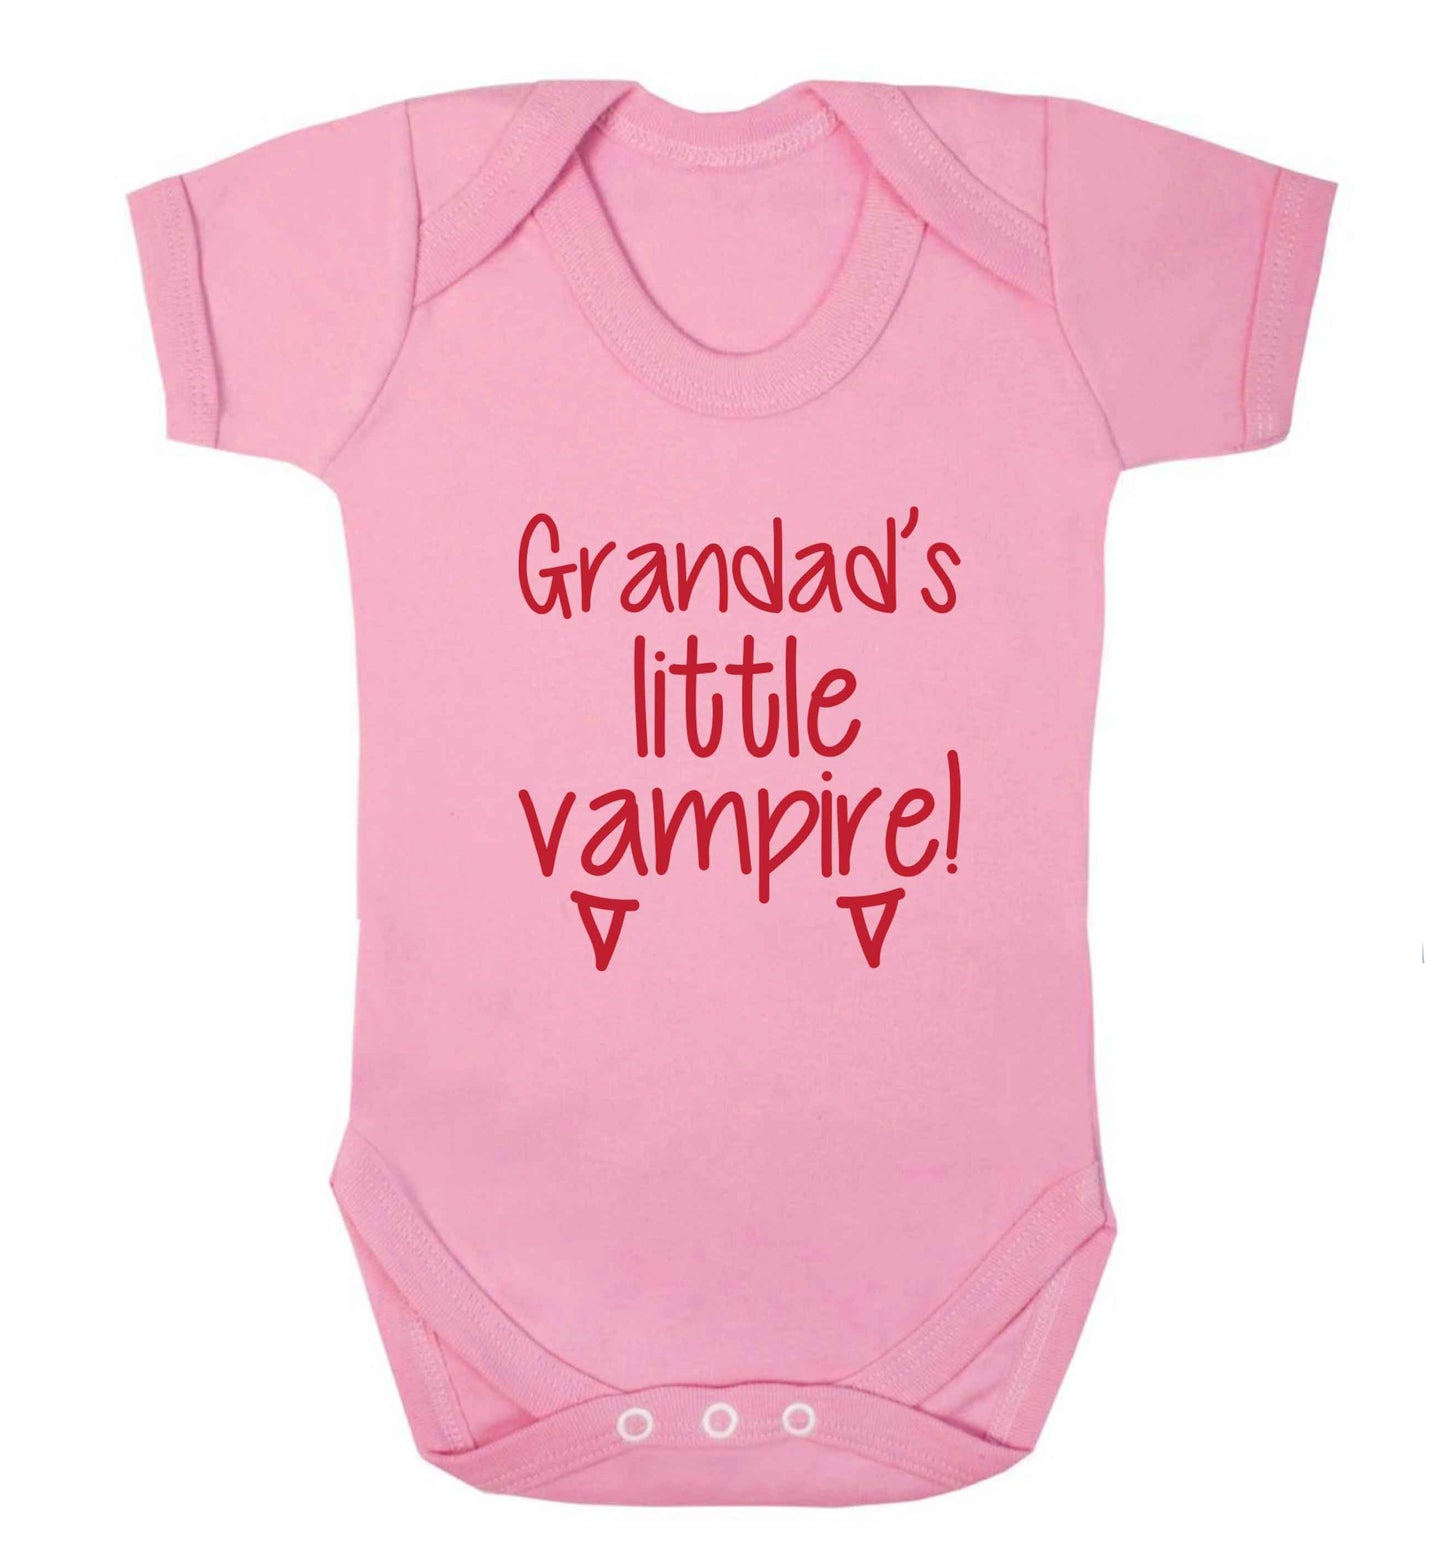 Grandad's little vampire baby vest pale pink 18-24 months